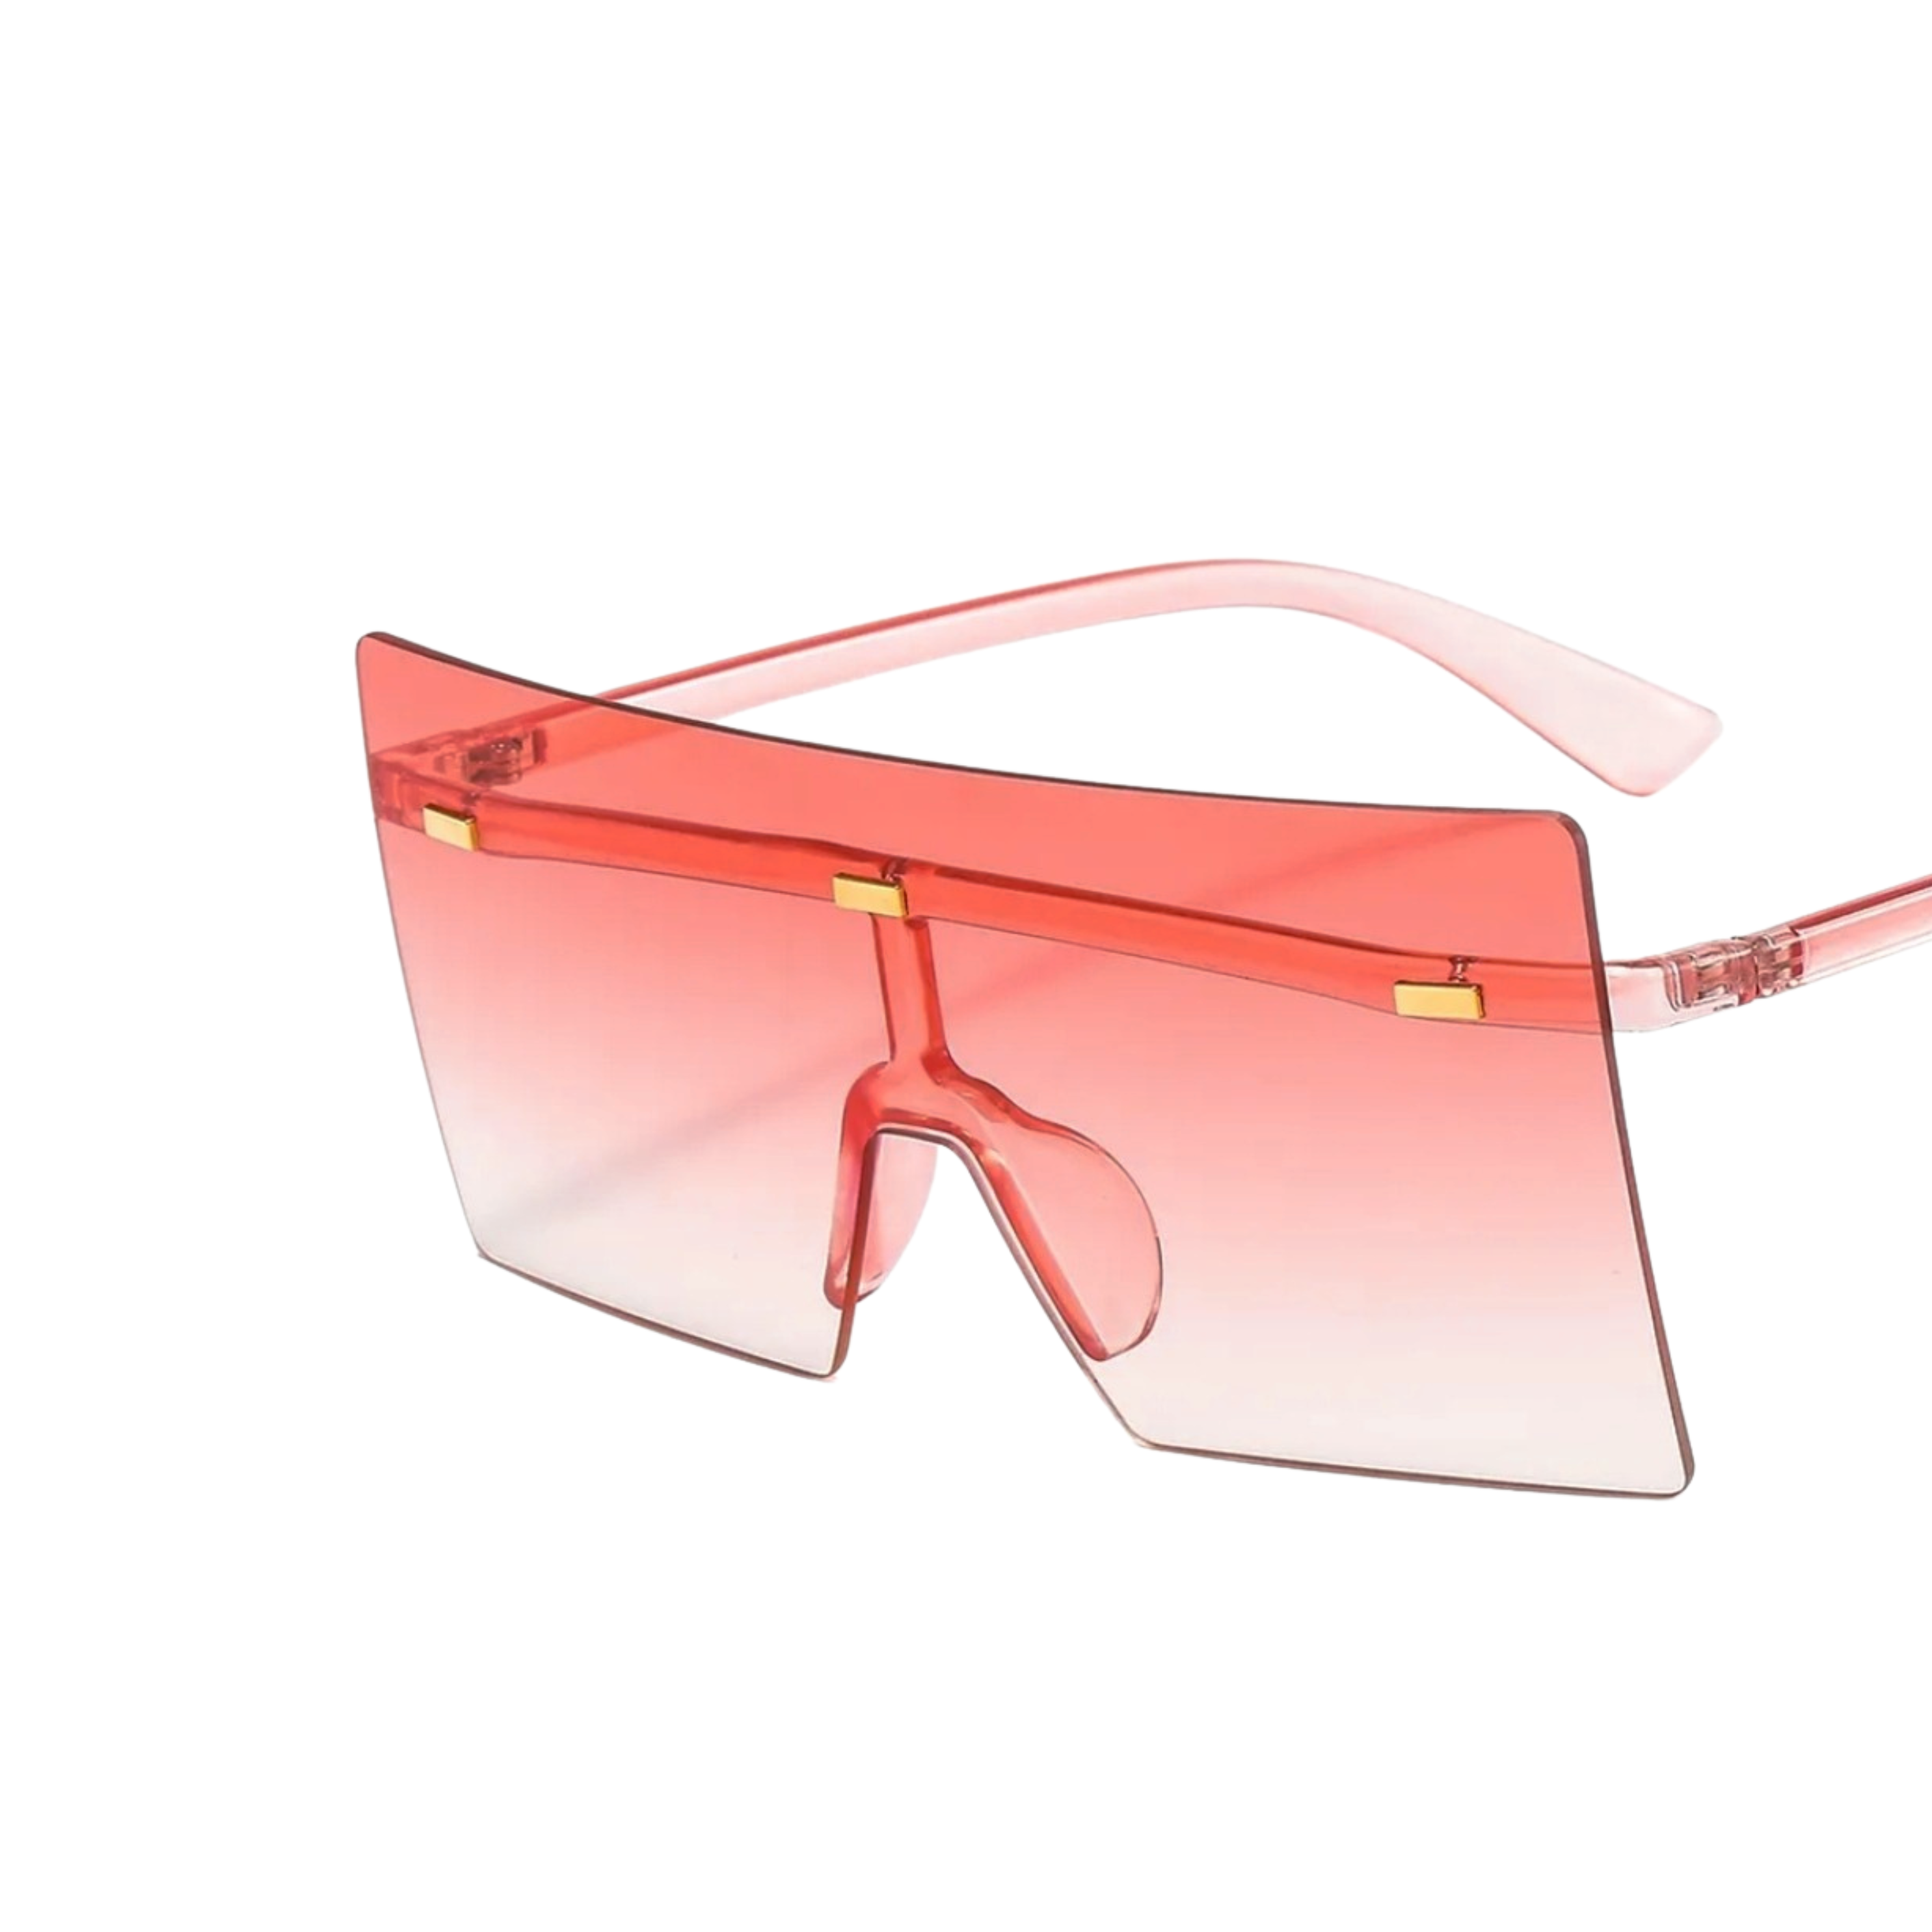 Summer Jam Rimless Sunglasses